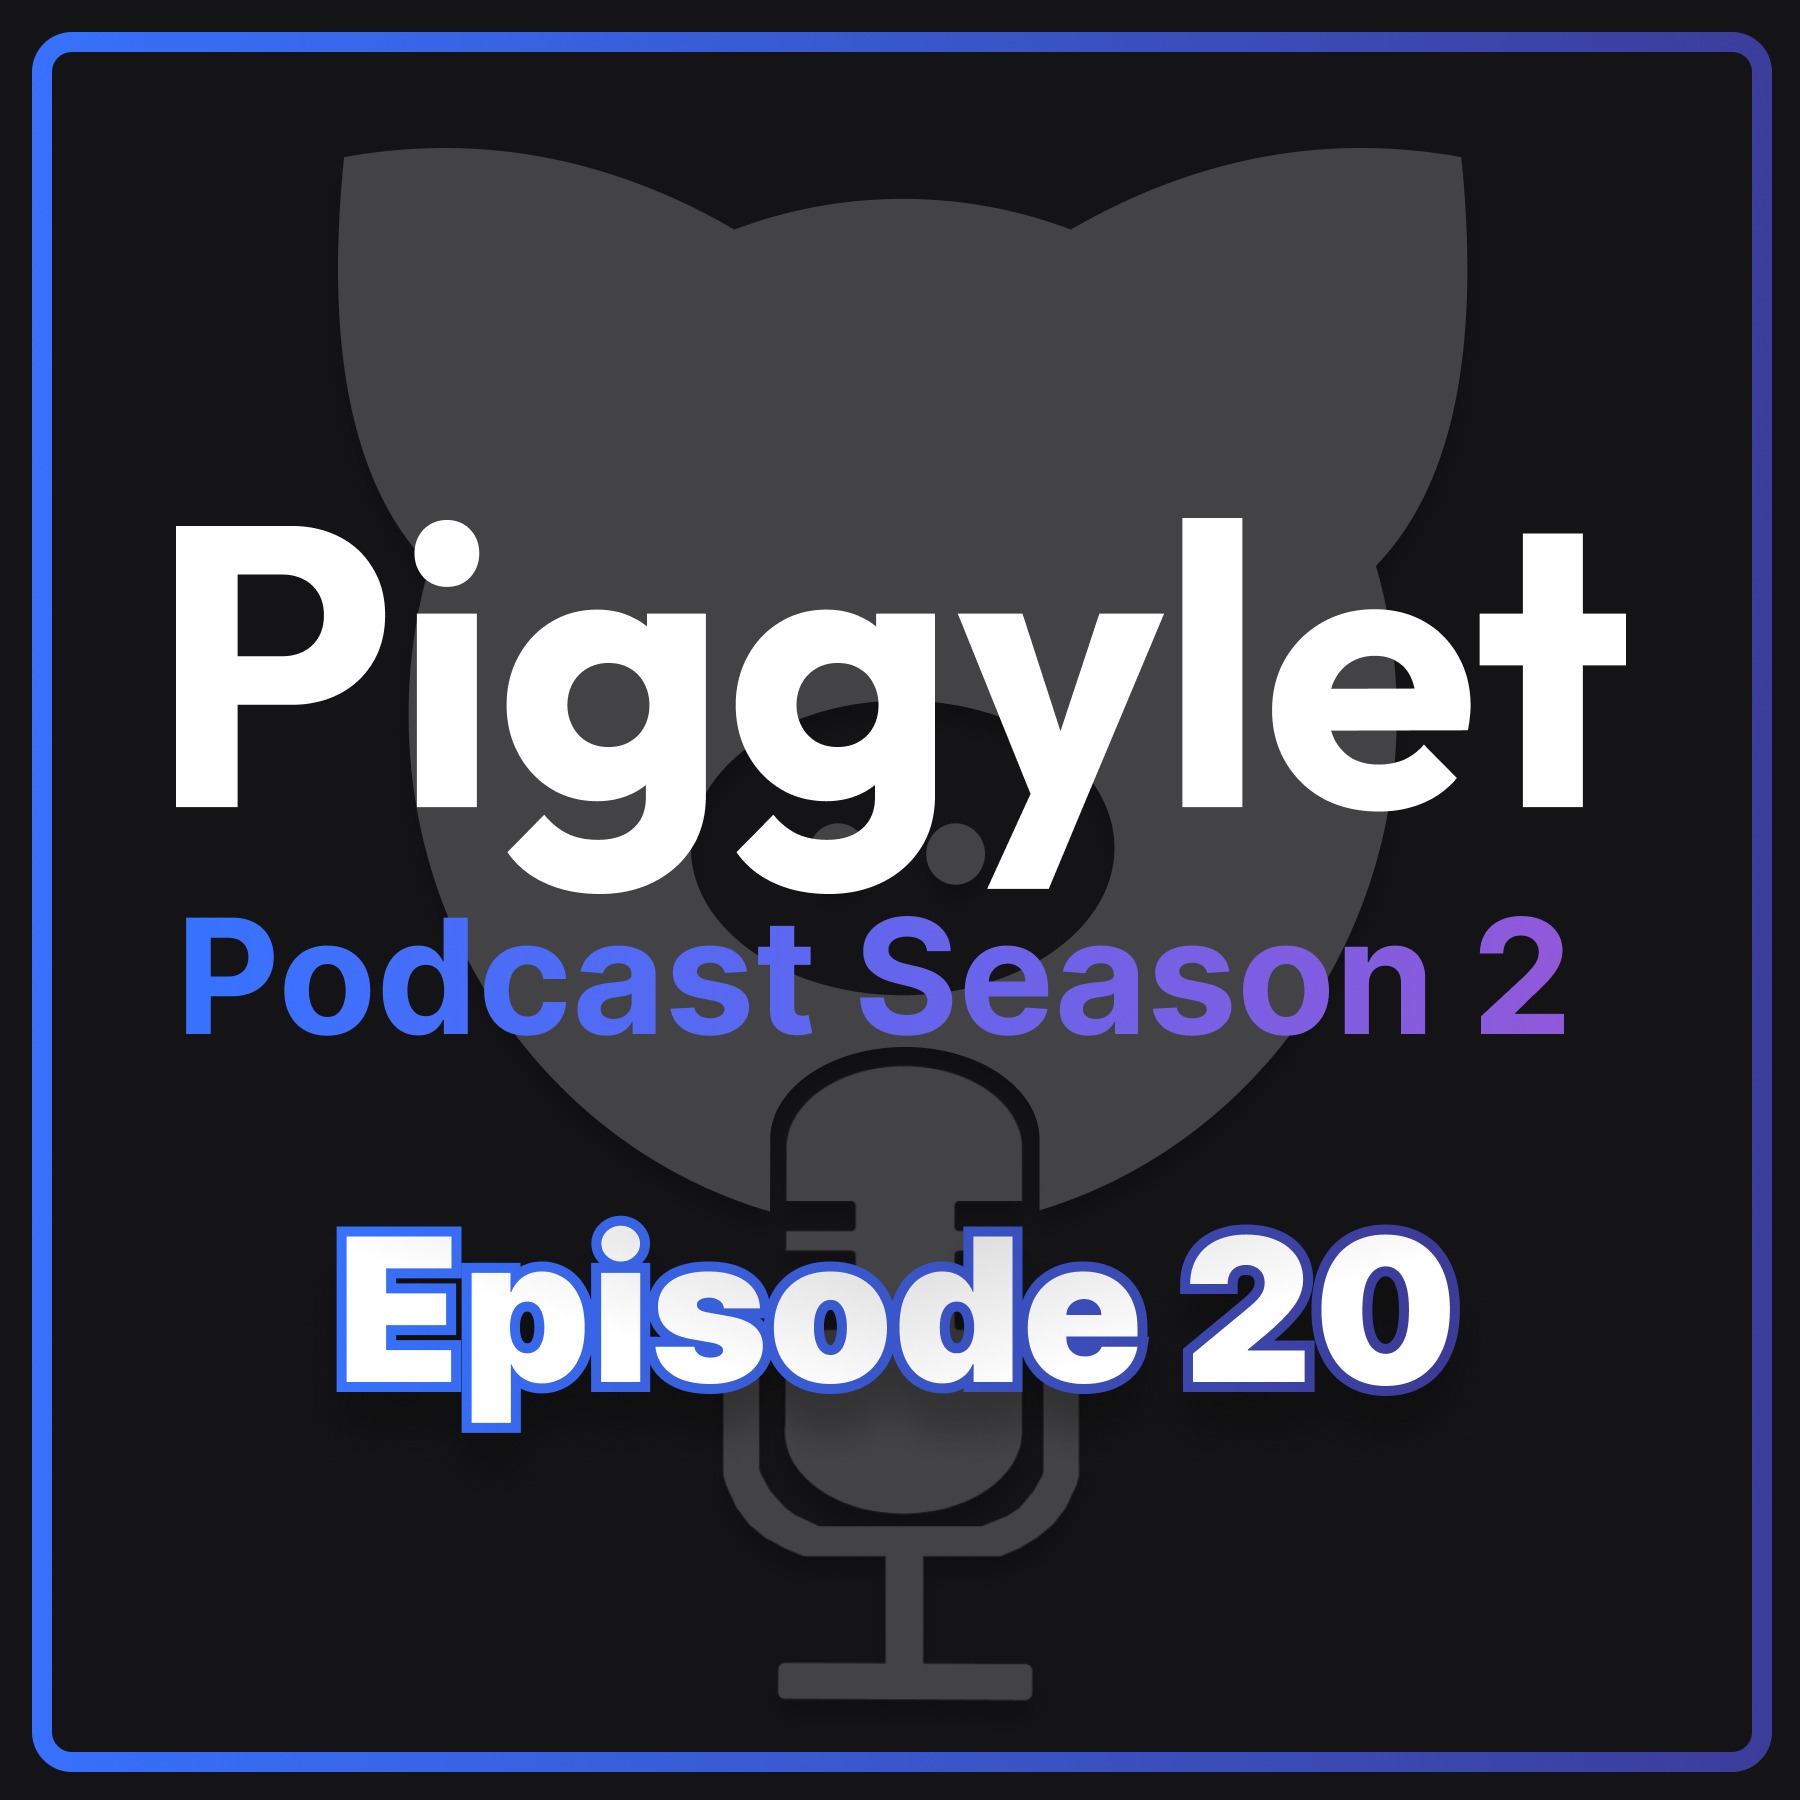 Piggylet Podcast Season 2: Episode 20